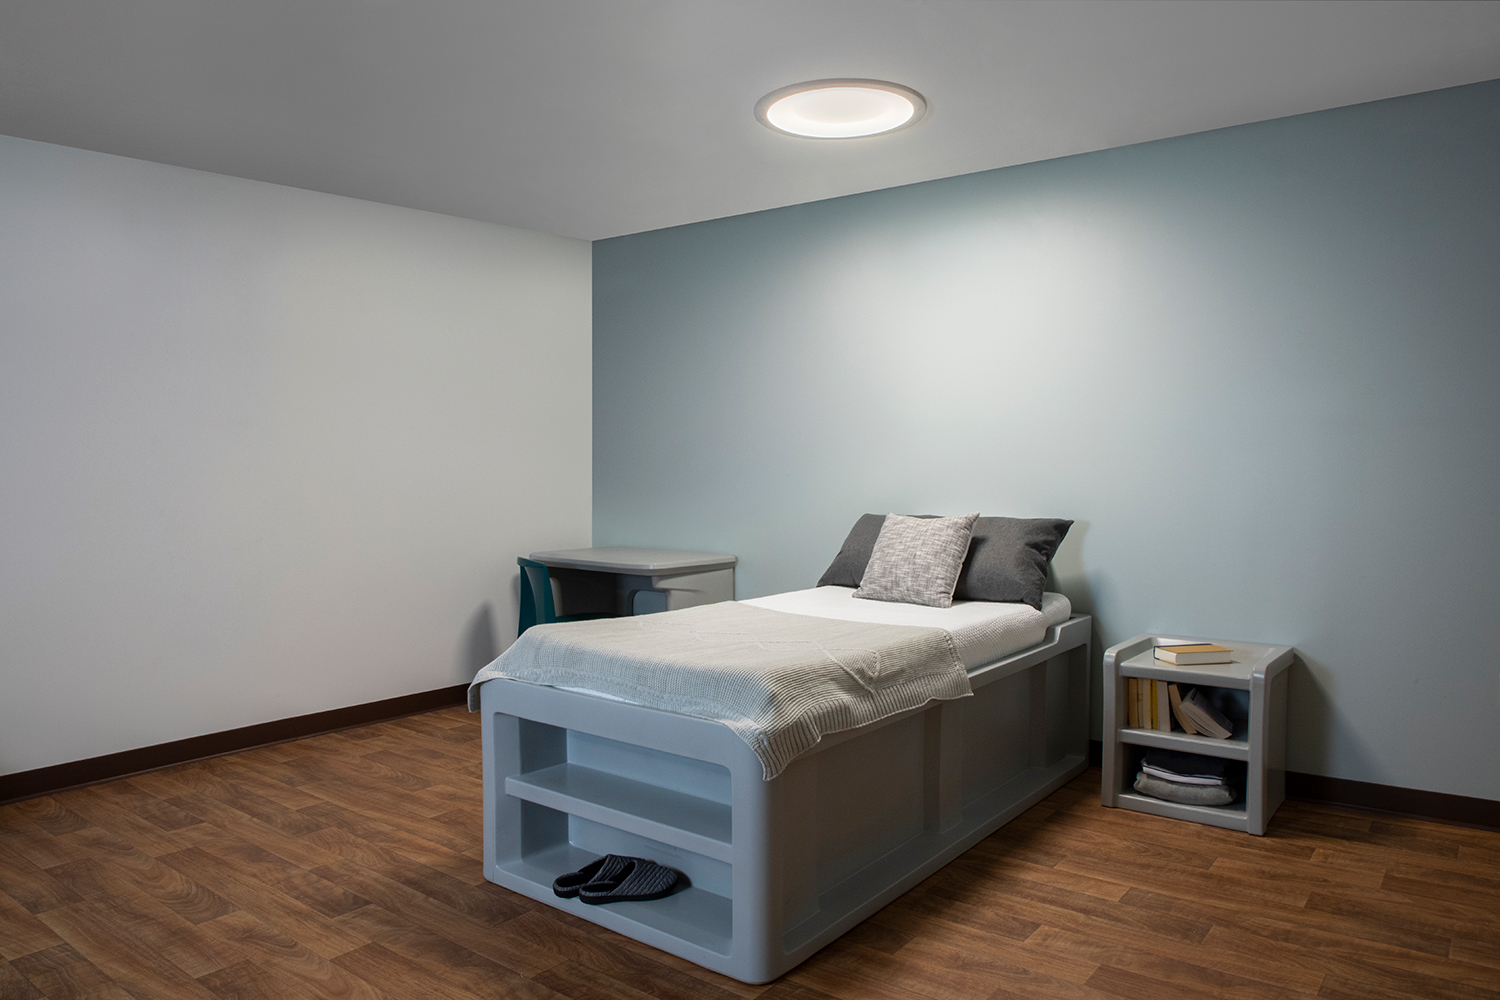 Symmetry behavioral health luminaire in a patient bedroom